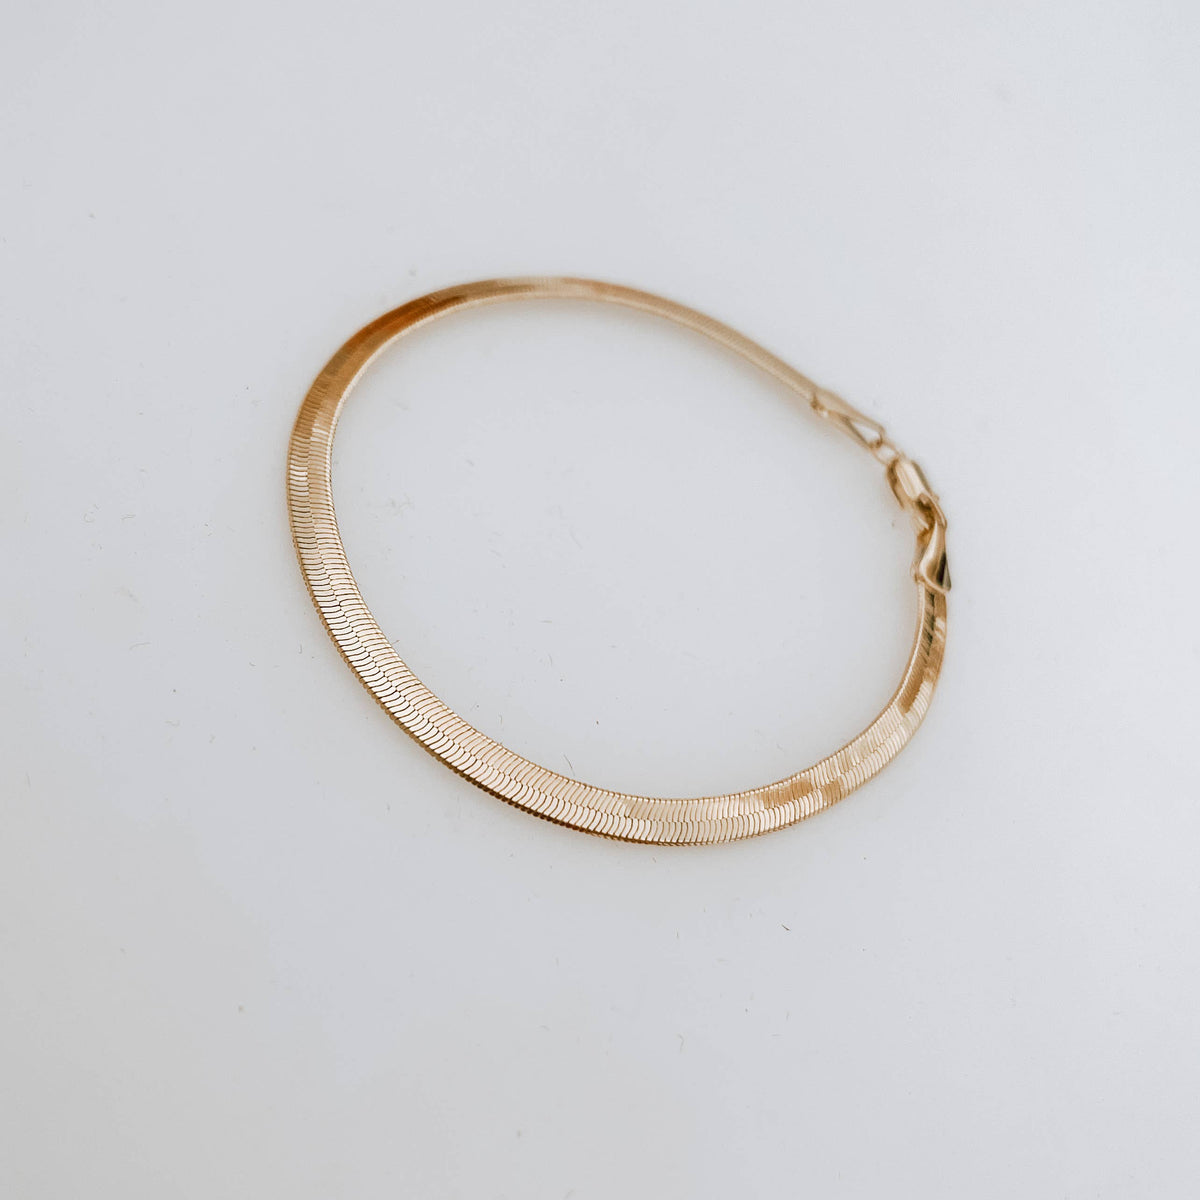 Harper Herringbone Bracelet: 7 inches